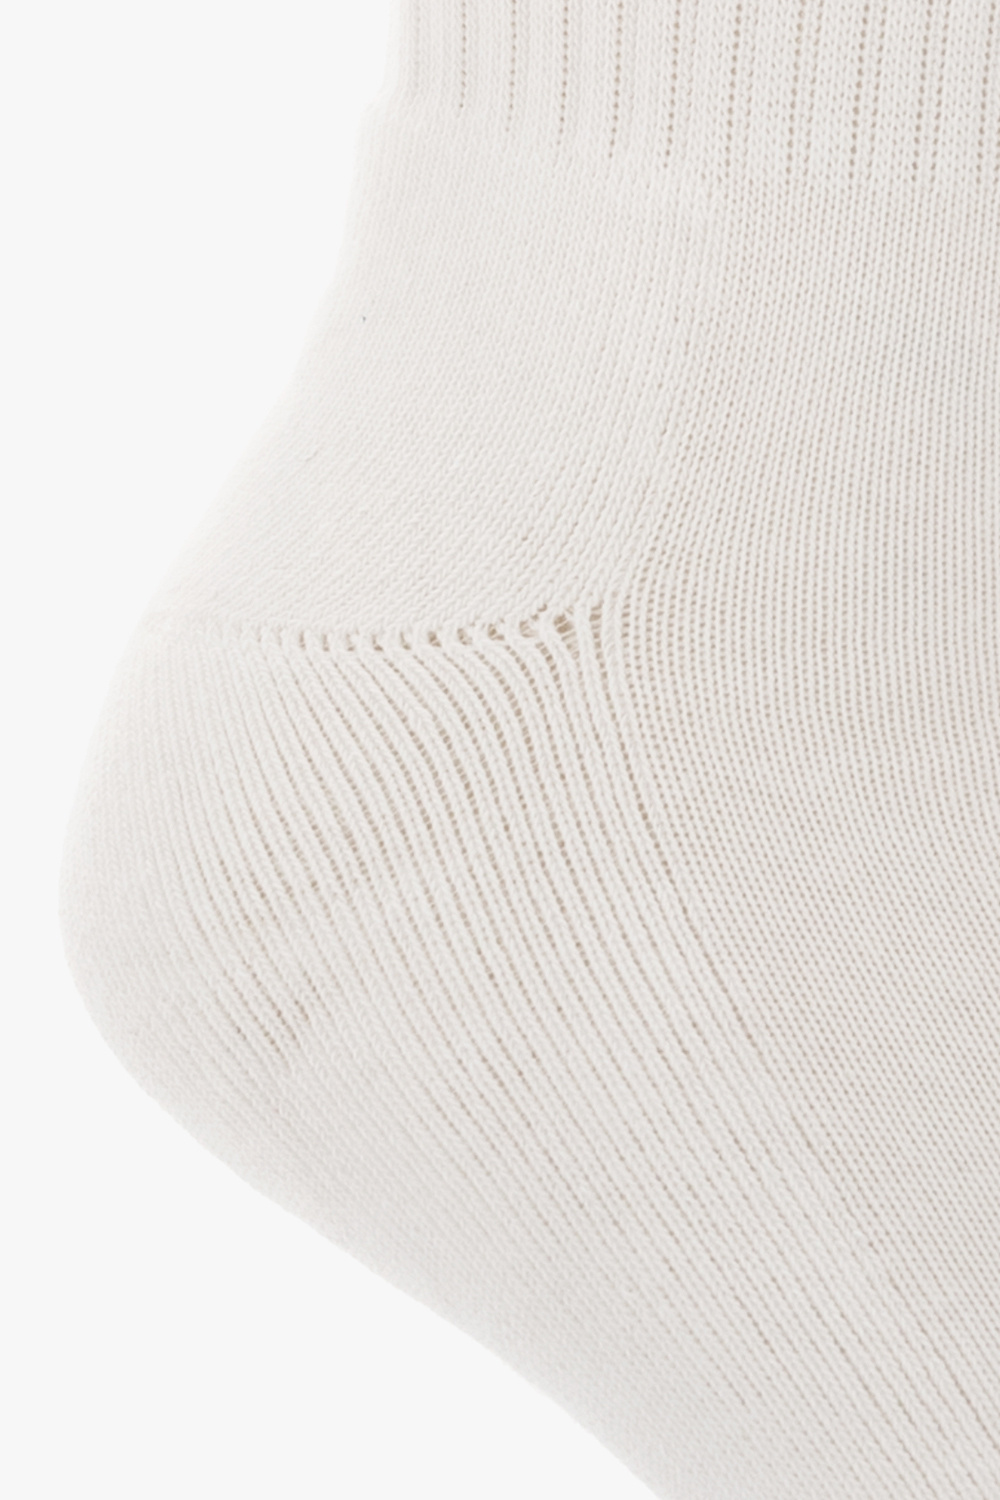 Ami Alexandre Mattiussi Cotton socks